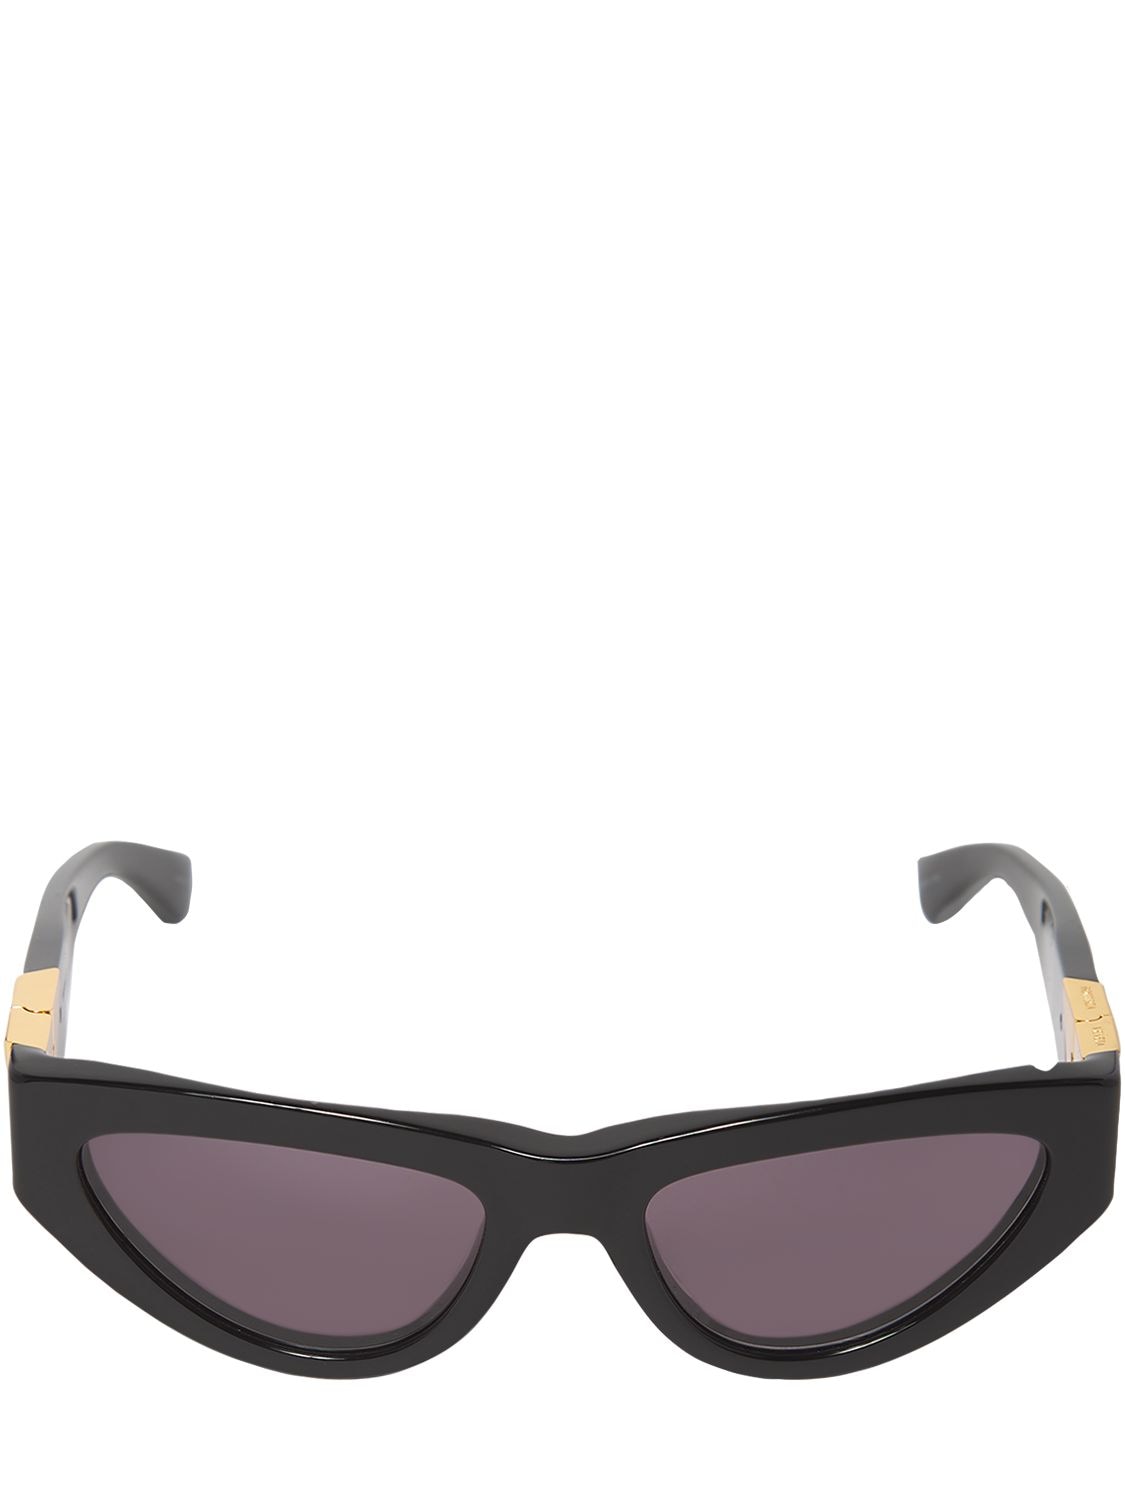 Bottega Veneta BV1176S Cat Eye Sunglasses